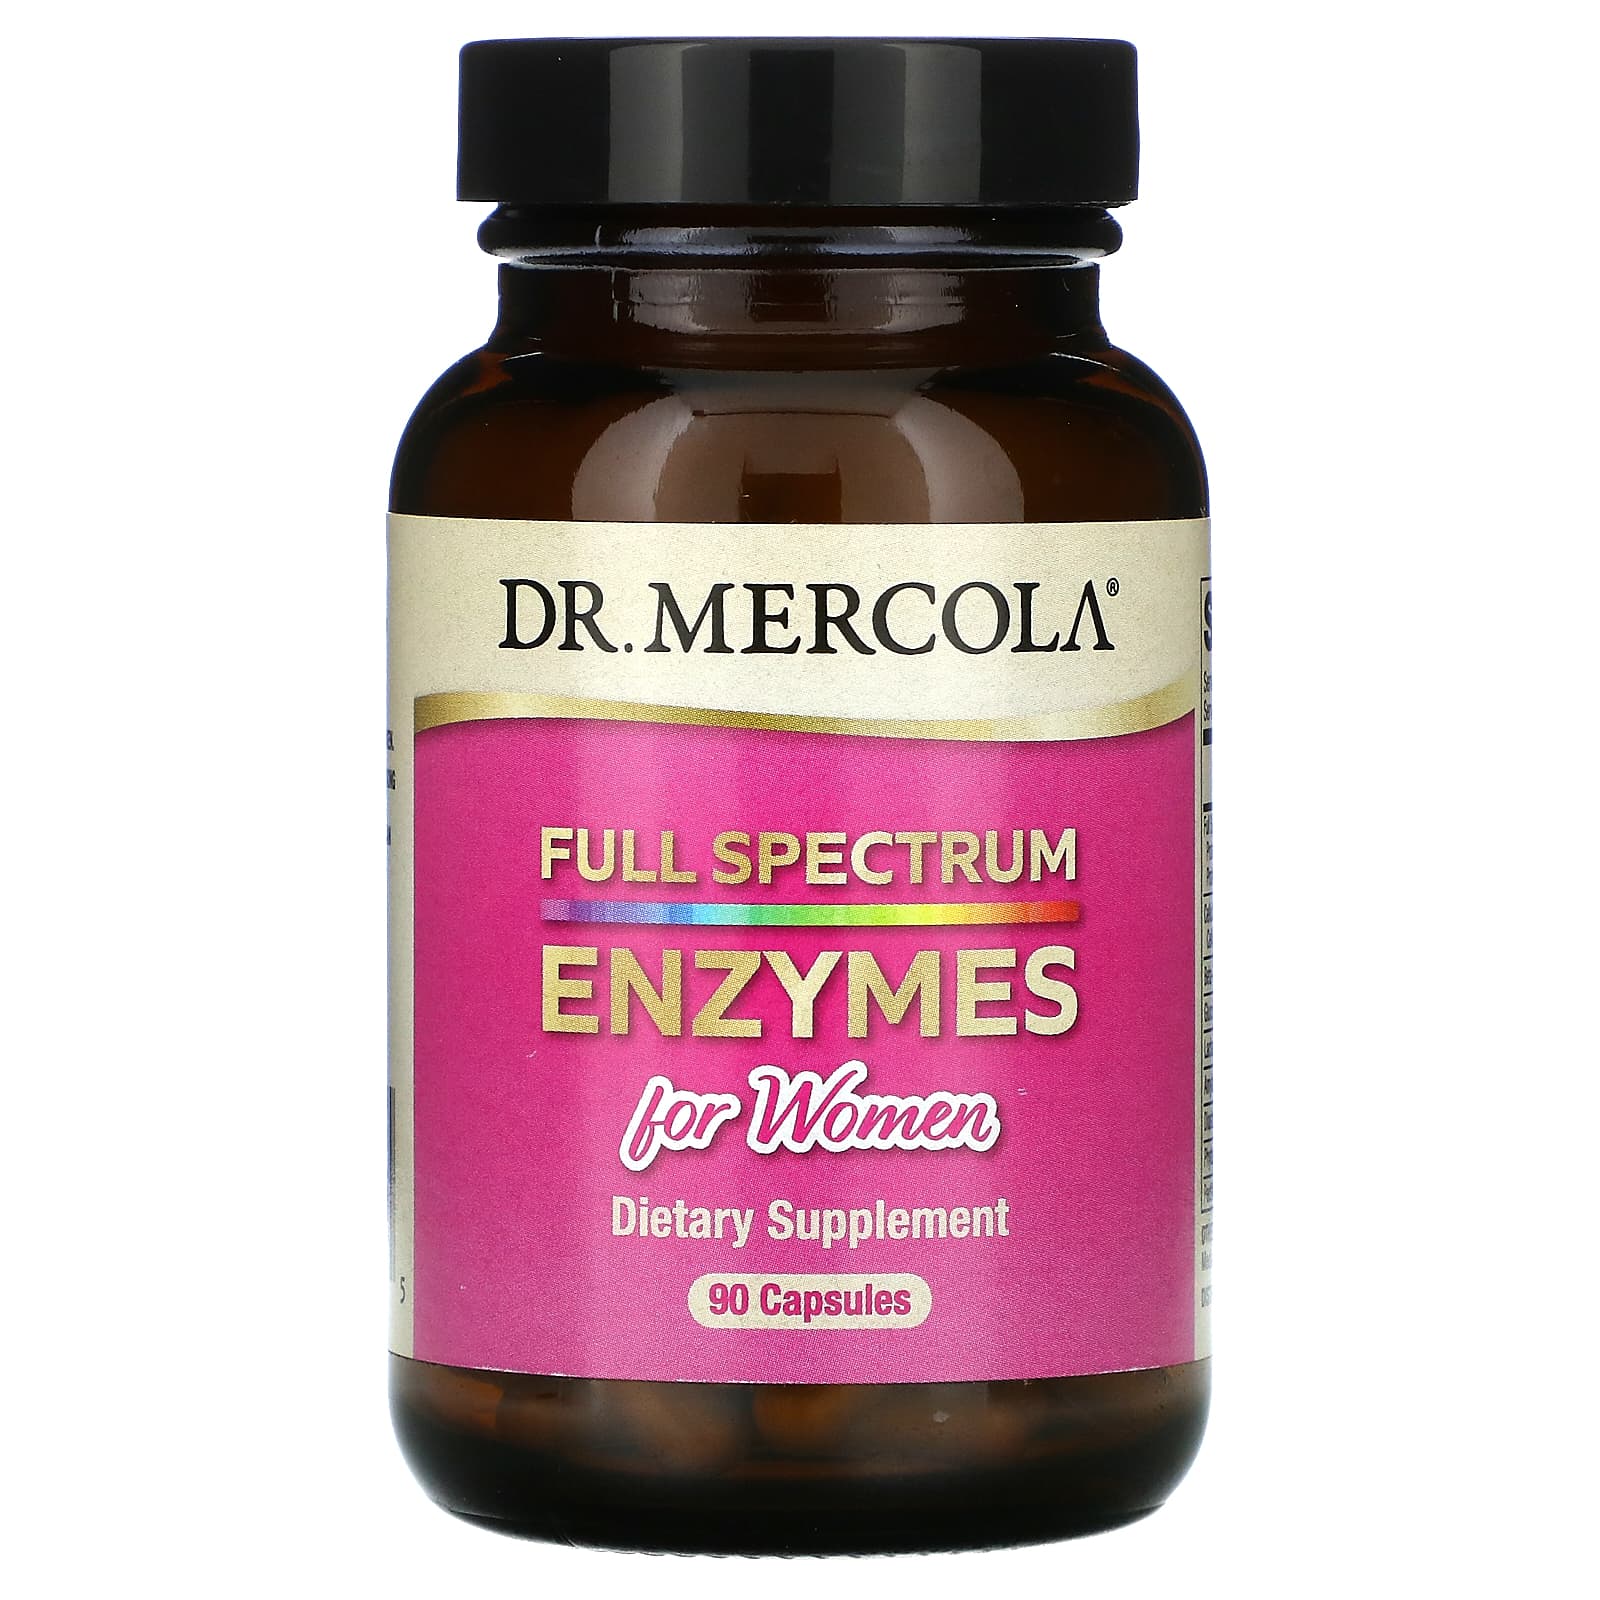 Dr. Mercola Full Spectrum Enzymes For Women 90 Capsules цена и фото